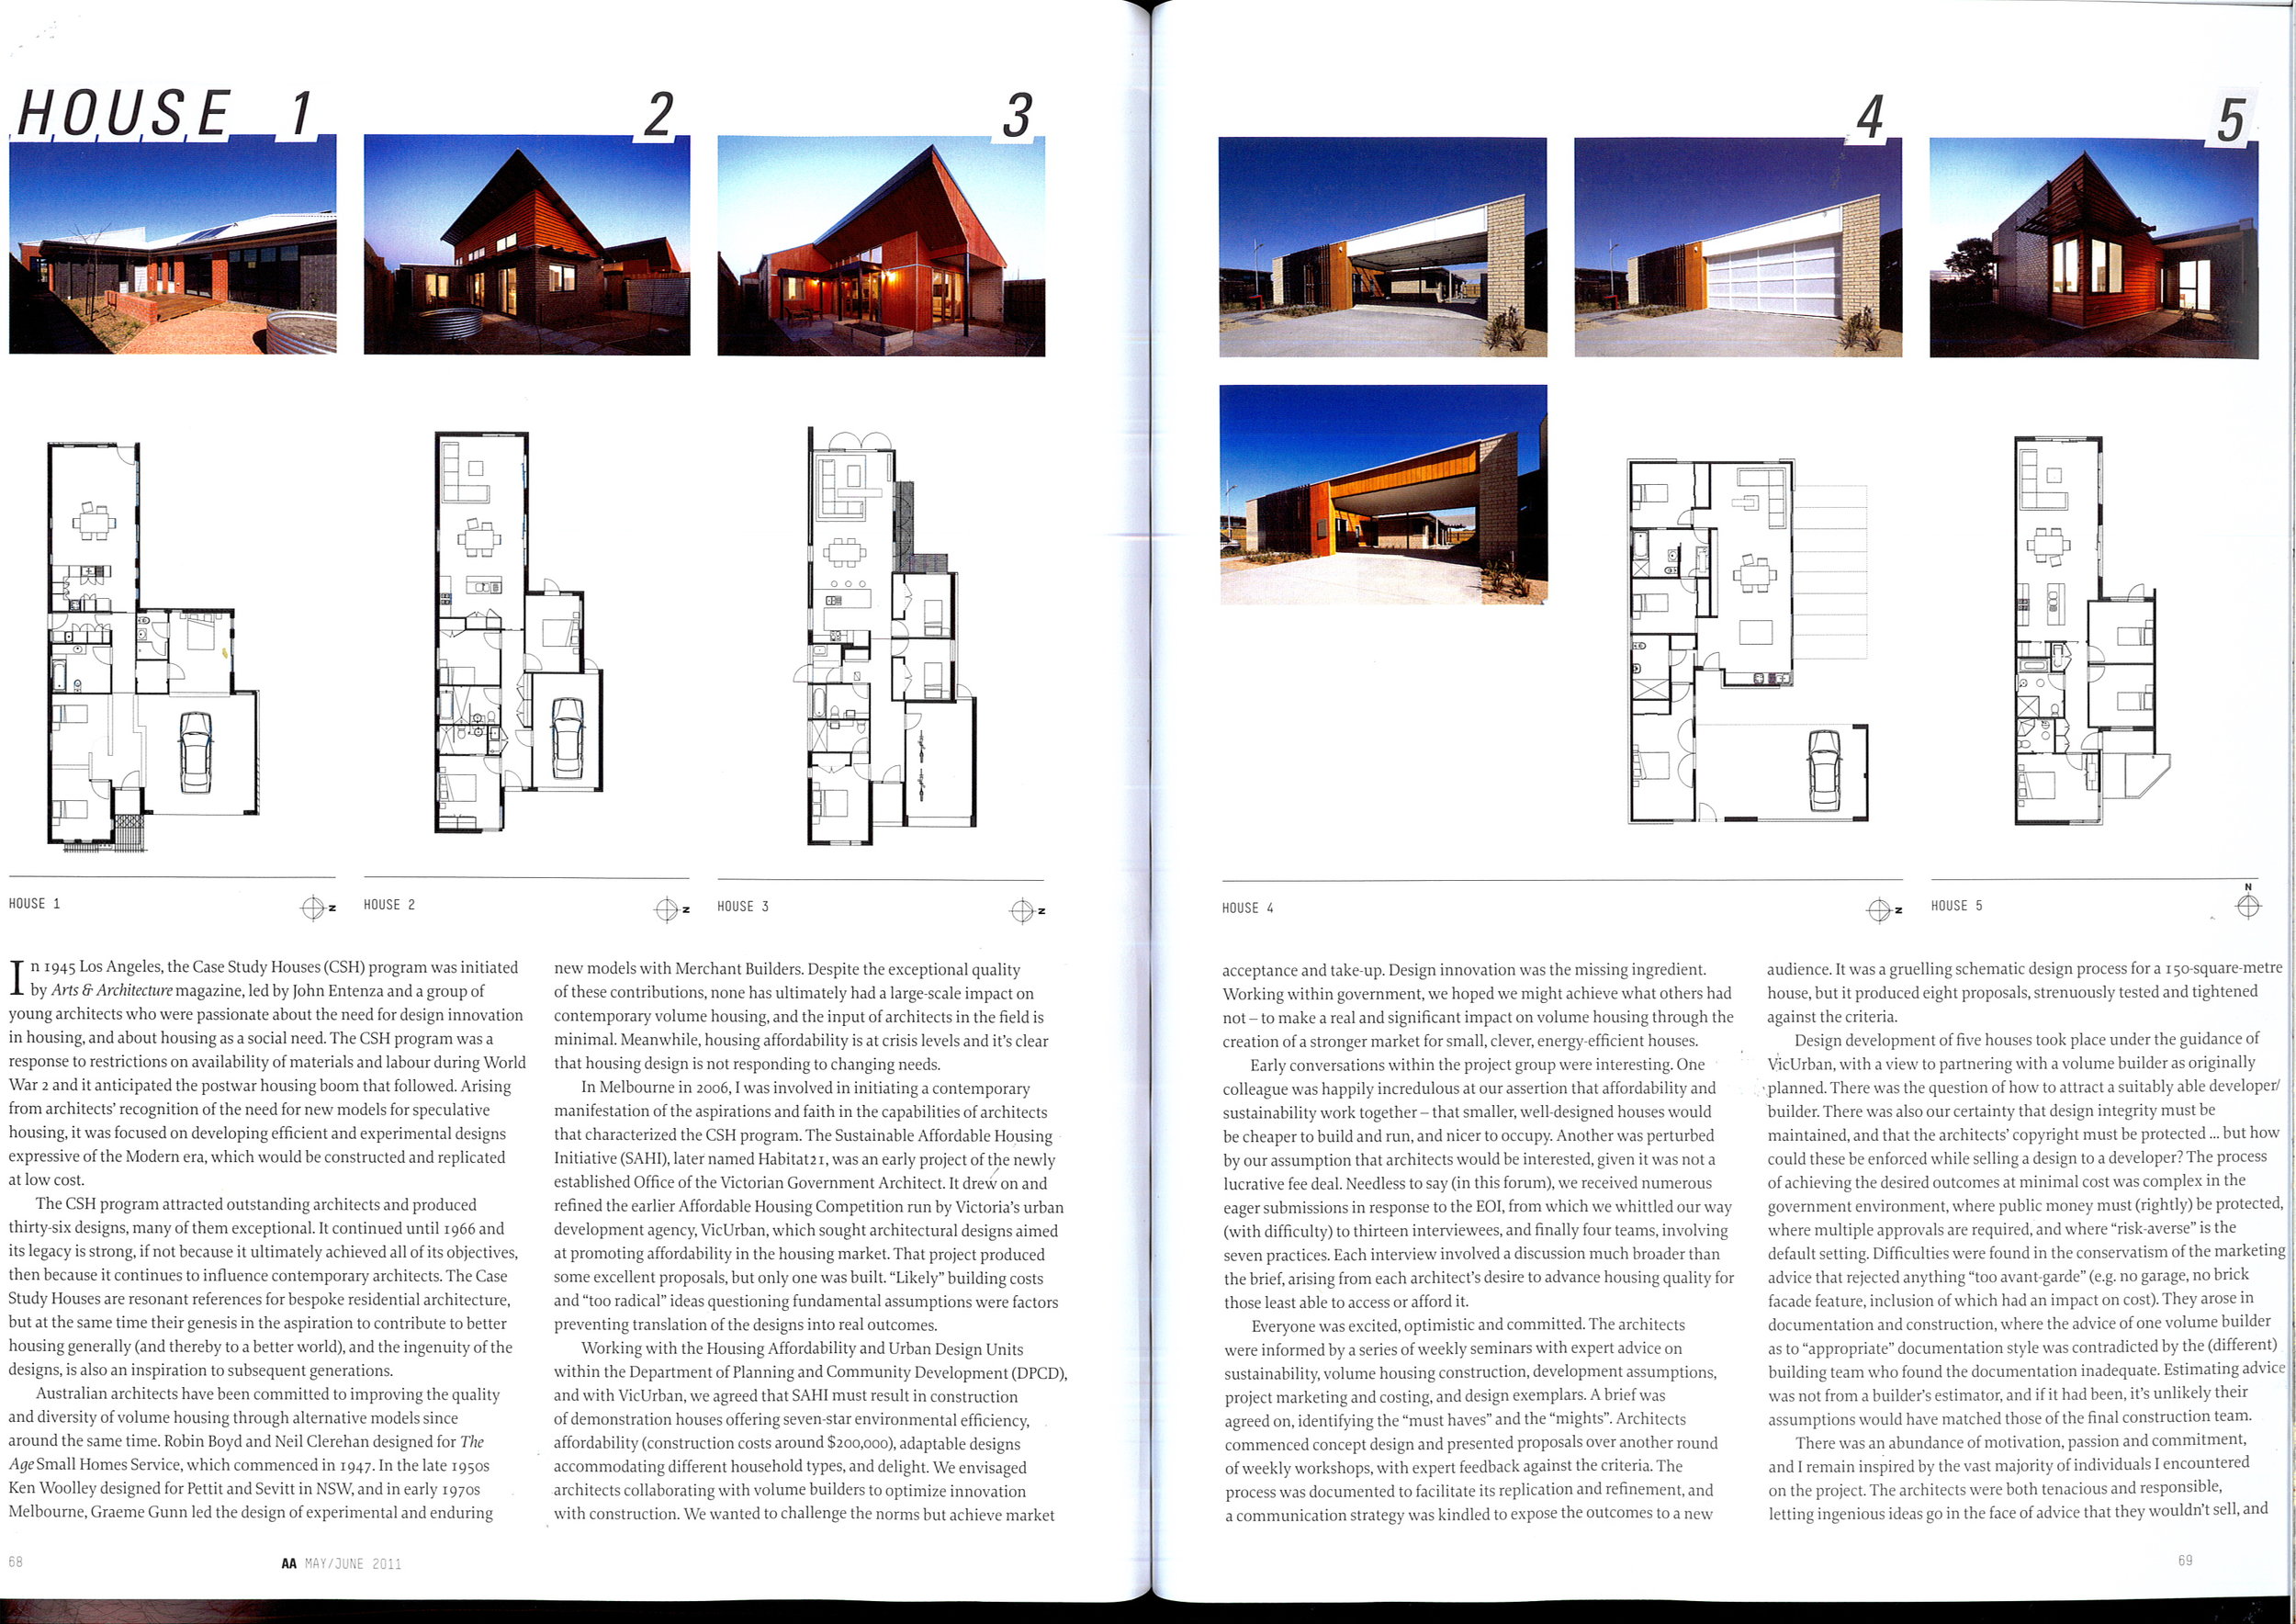 2011_Architecture Australia_Habitat 21_Page_3.jpg